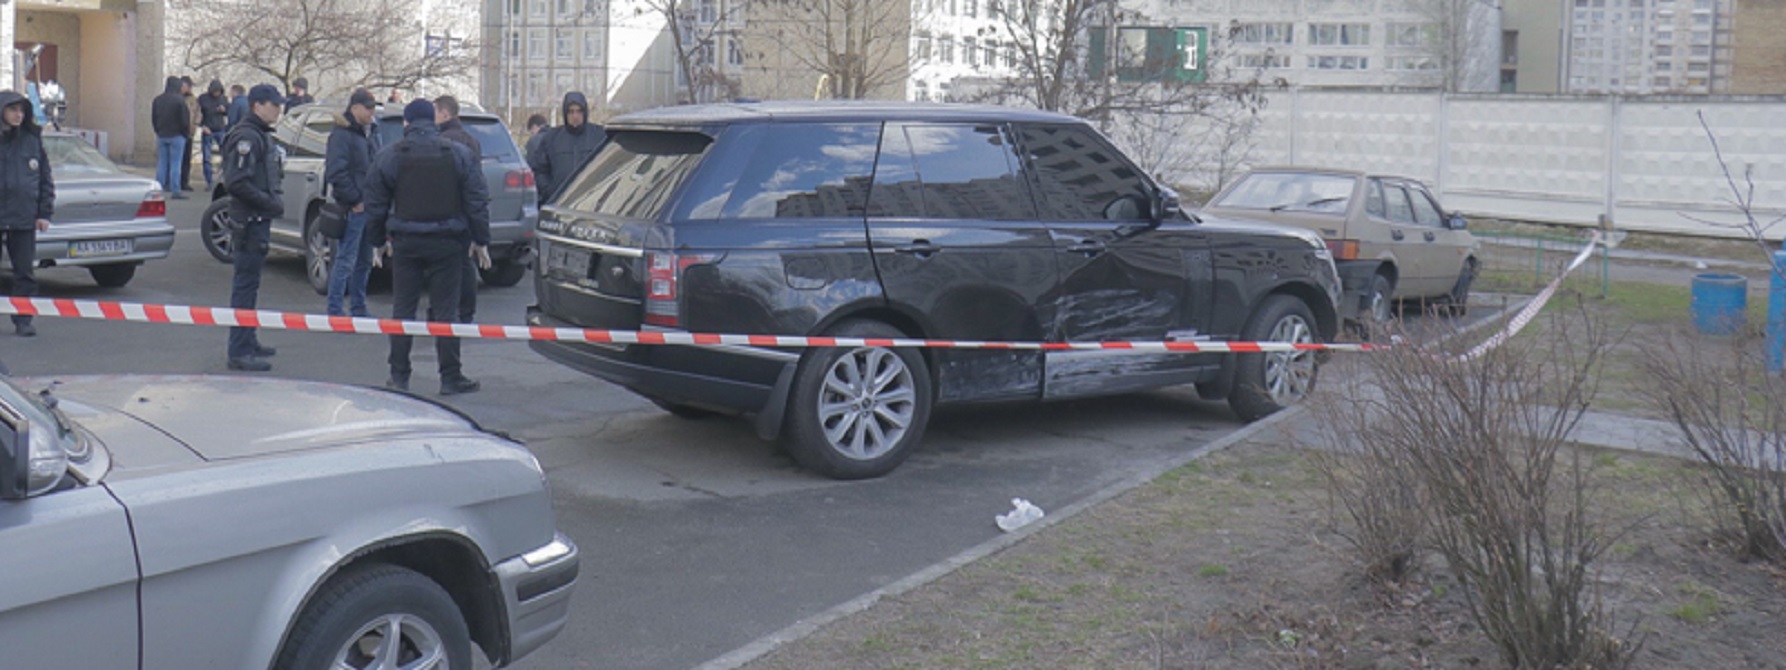 На офис Борислава Березы напали люди с автоматами  - фото 1